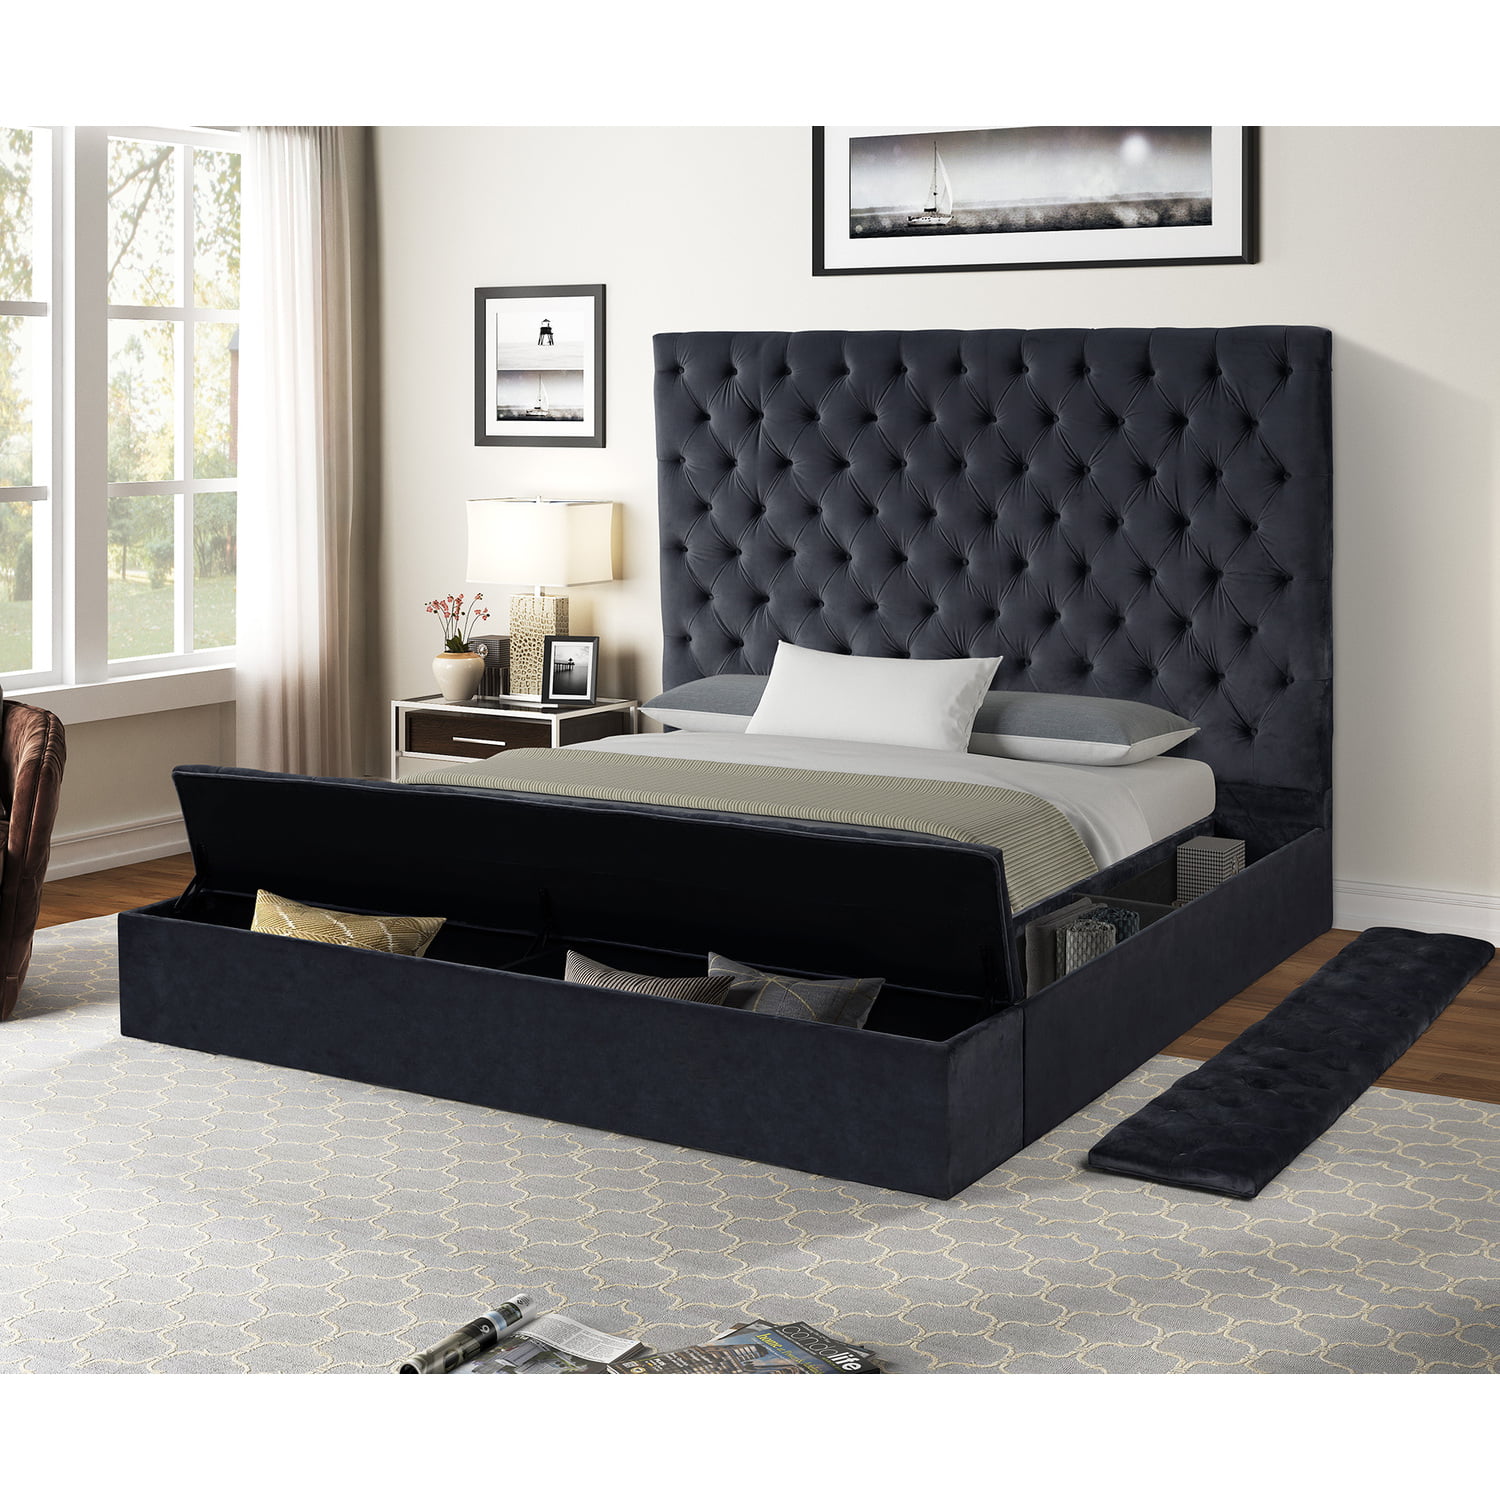 5 PIECE QUEEN SIZE BEDROOM SET • Furniture & Mattress Discount King